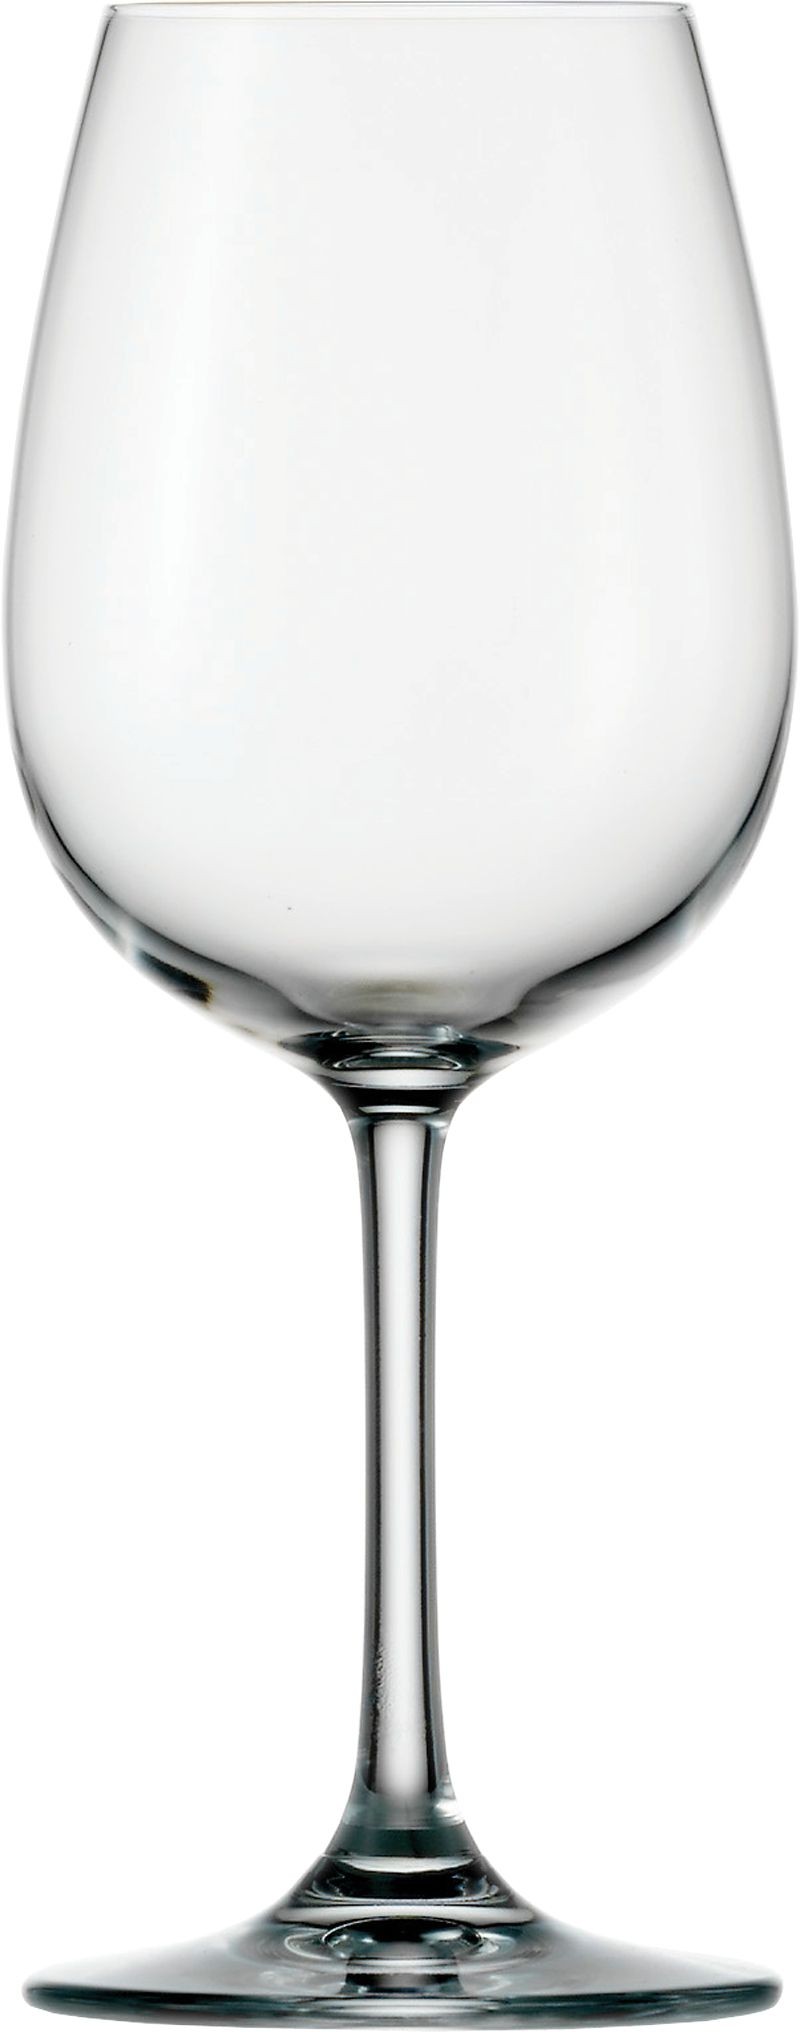 Stolzle Weinland White Wine Glass 12.25oz / 350ml LCE at 250ml 